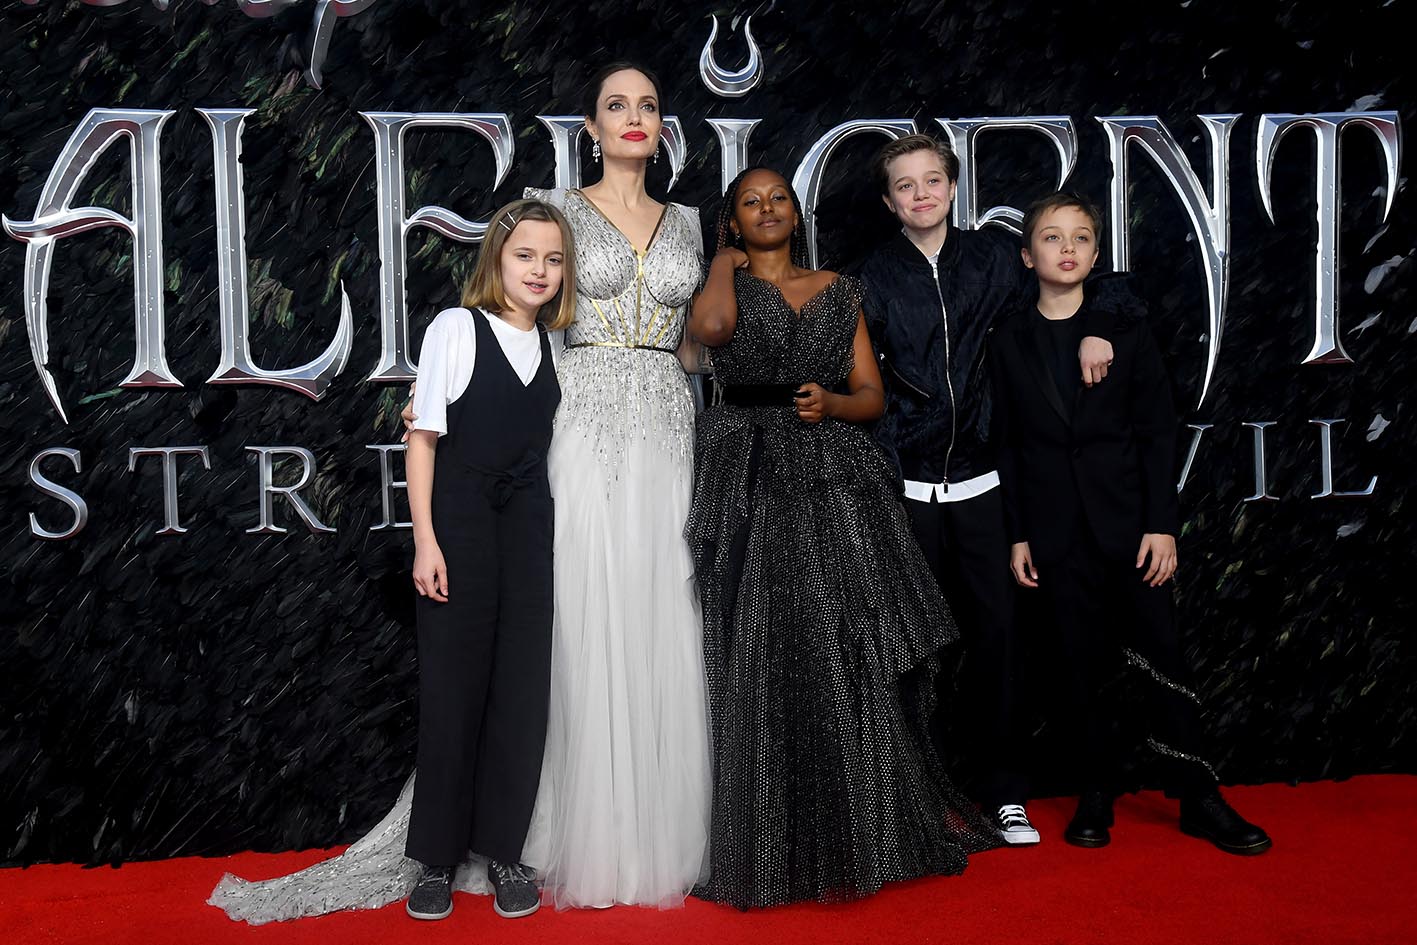 H Angelina Jolie με τα παιδιά της Vivienne Marcheline Jolie-Pitt, Zahara Marley Jolie-Pitt, Shiloh Nouvel Jolie-Pitt και Knox Leon Jolie-Pitt παρευρέθηκαν στην πρεμι΄ρα της ταινίας "Maleficent: Mistress of Evil" στο Λονδίνο, στις 9 Οκτωβρίου 2019.